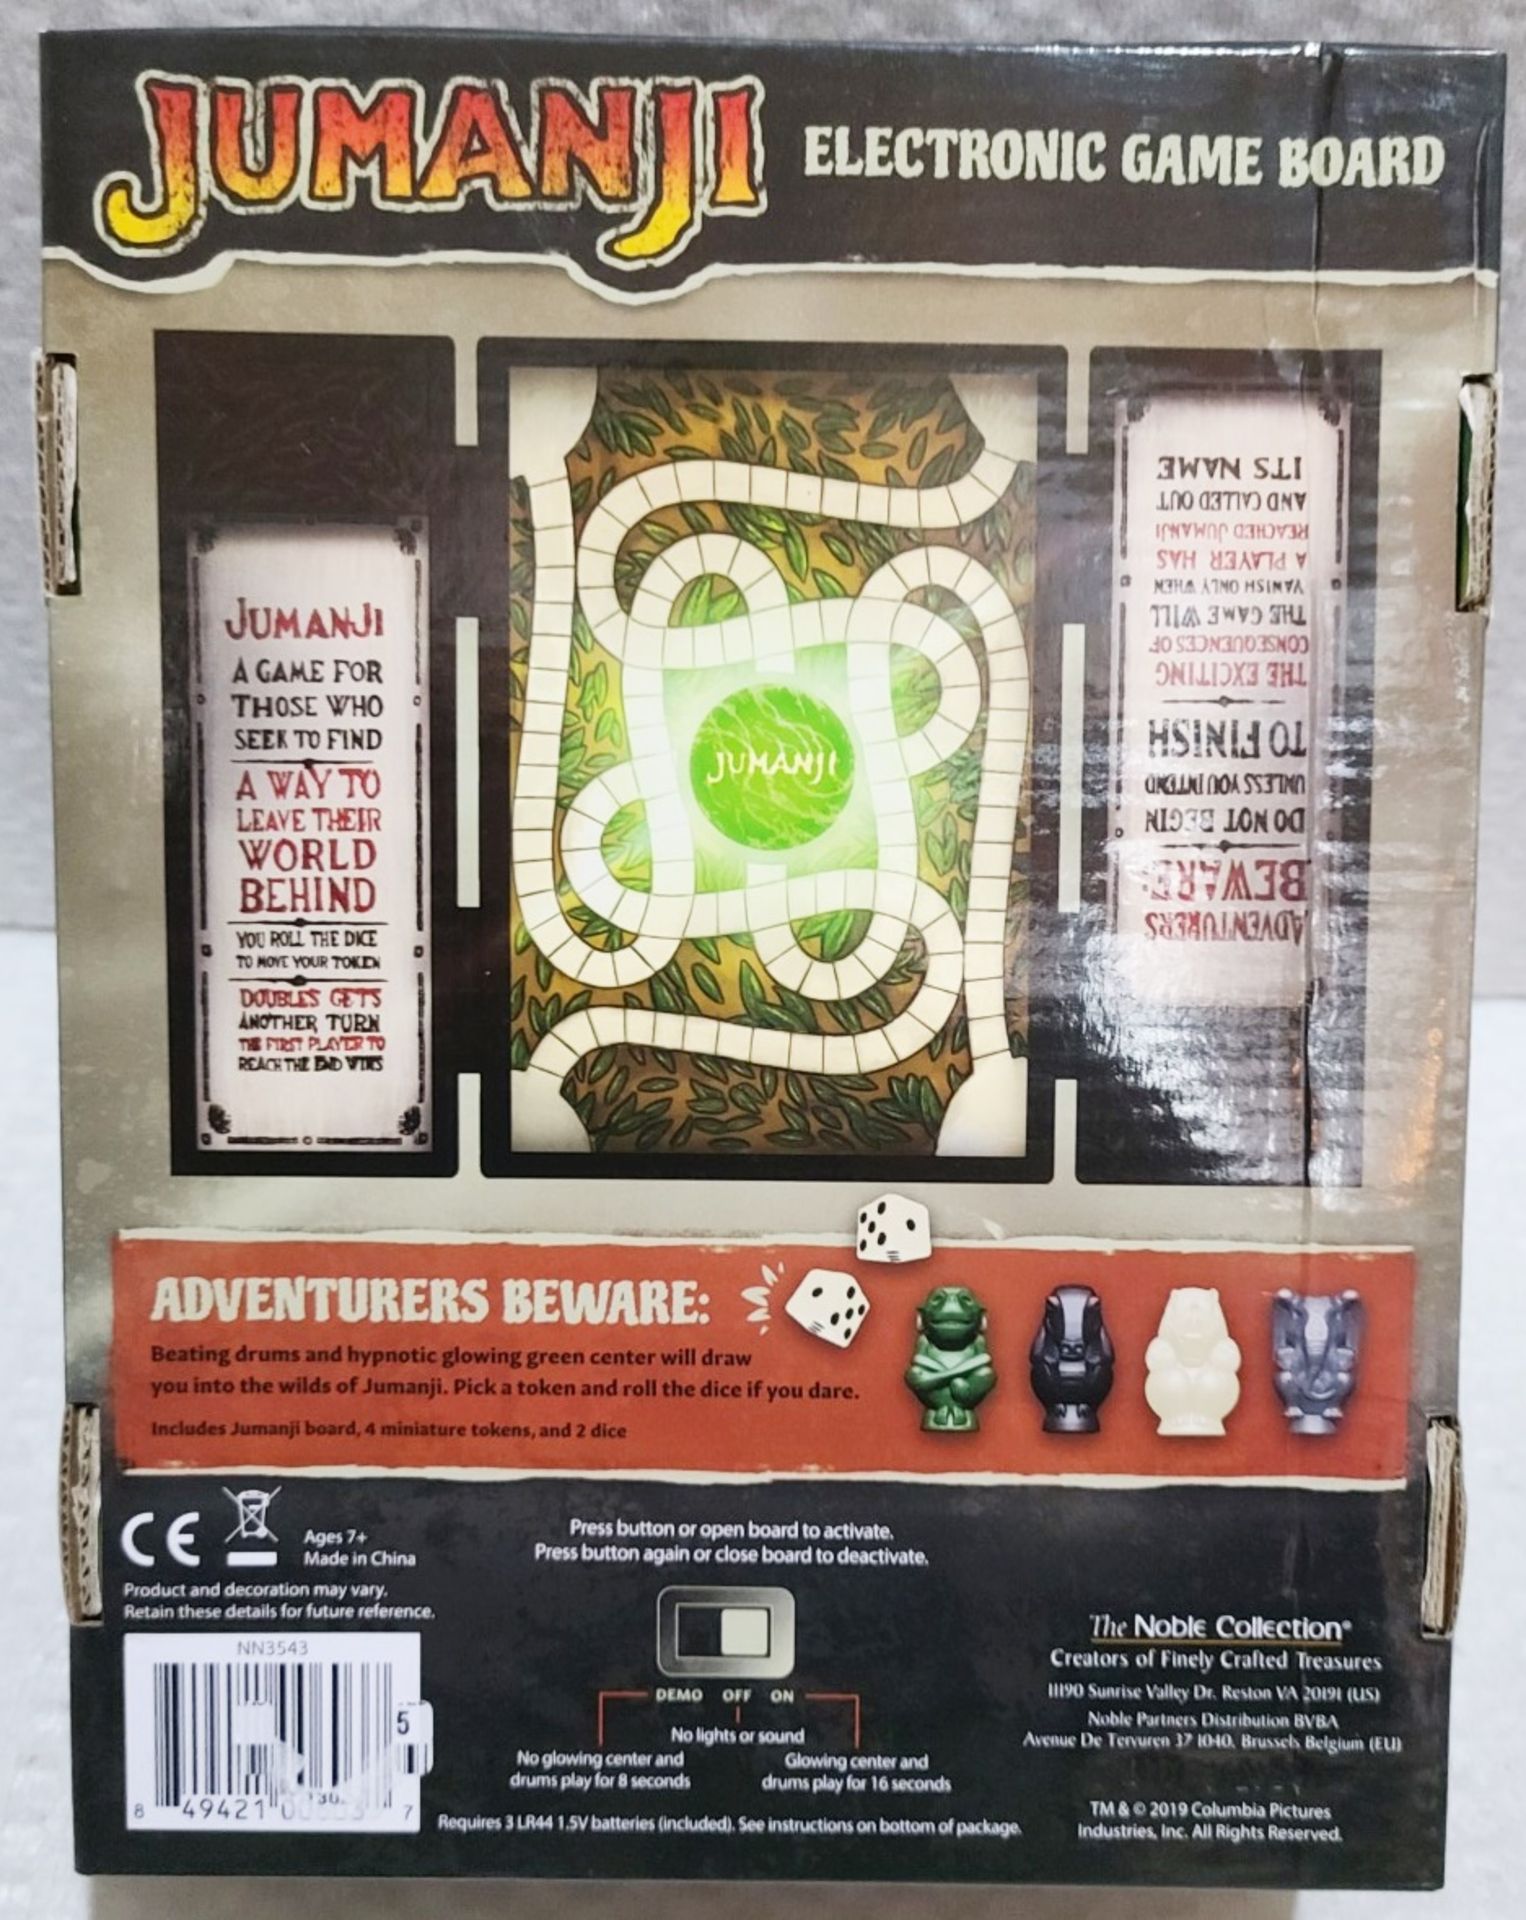 1 x JUMANJI Mini Prop Electronic Board Game - Original Price £22.00 - Unused Boxed Stock - Ref: - Image 2 of 3